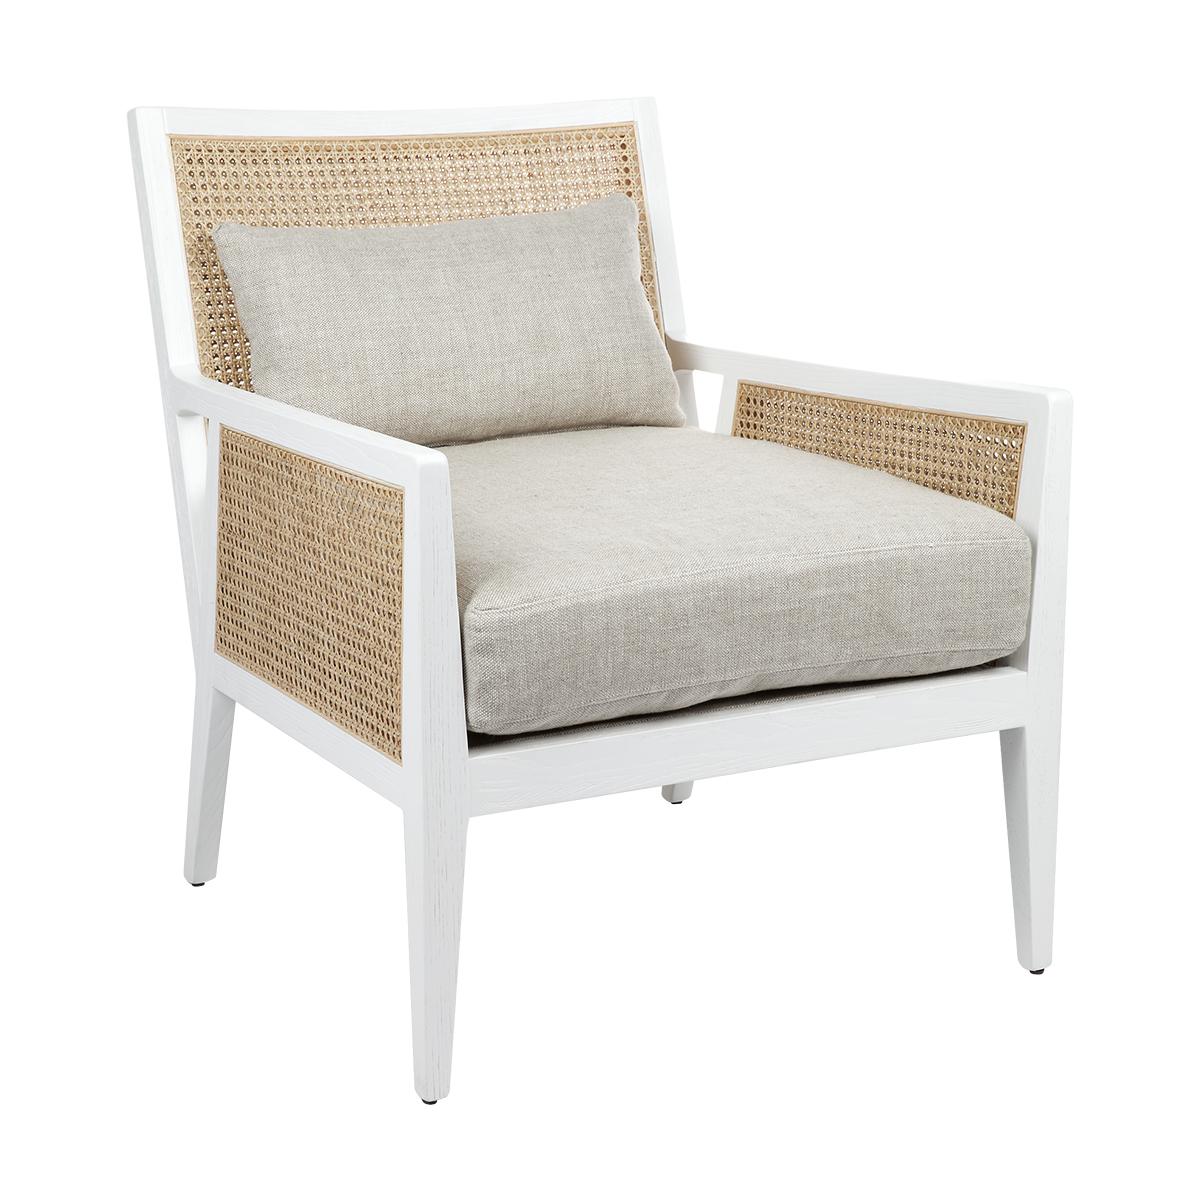 Cafe Furniture - White Rattan Arm Chair